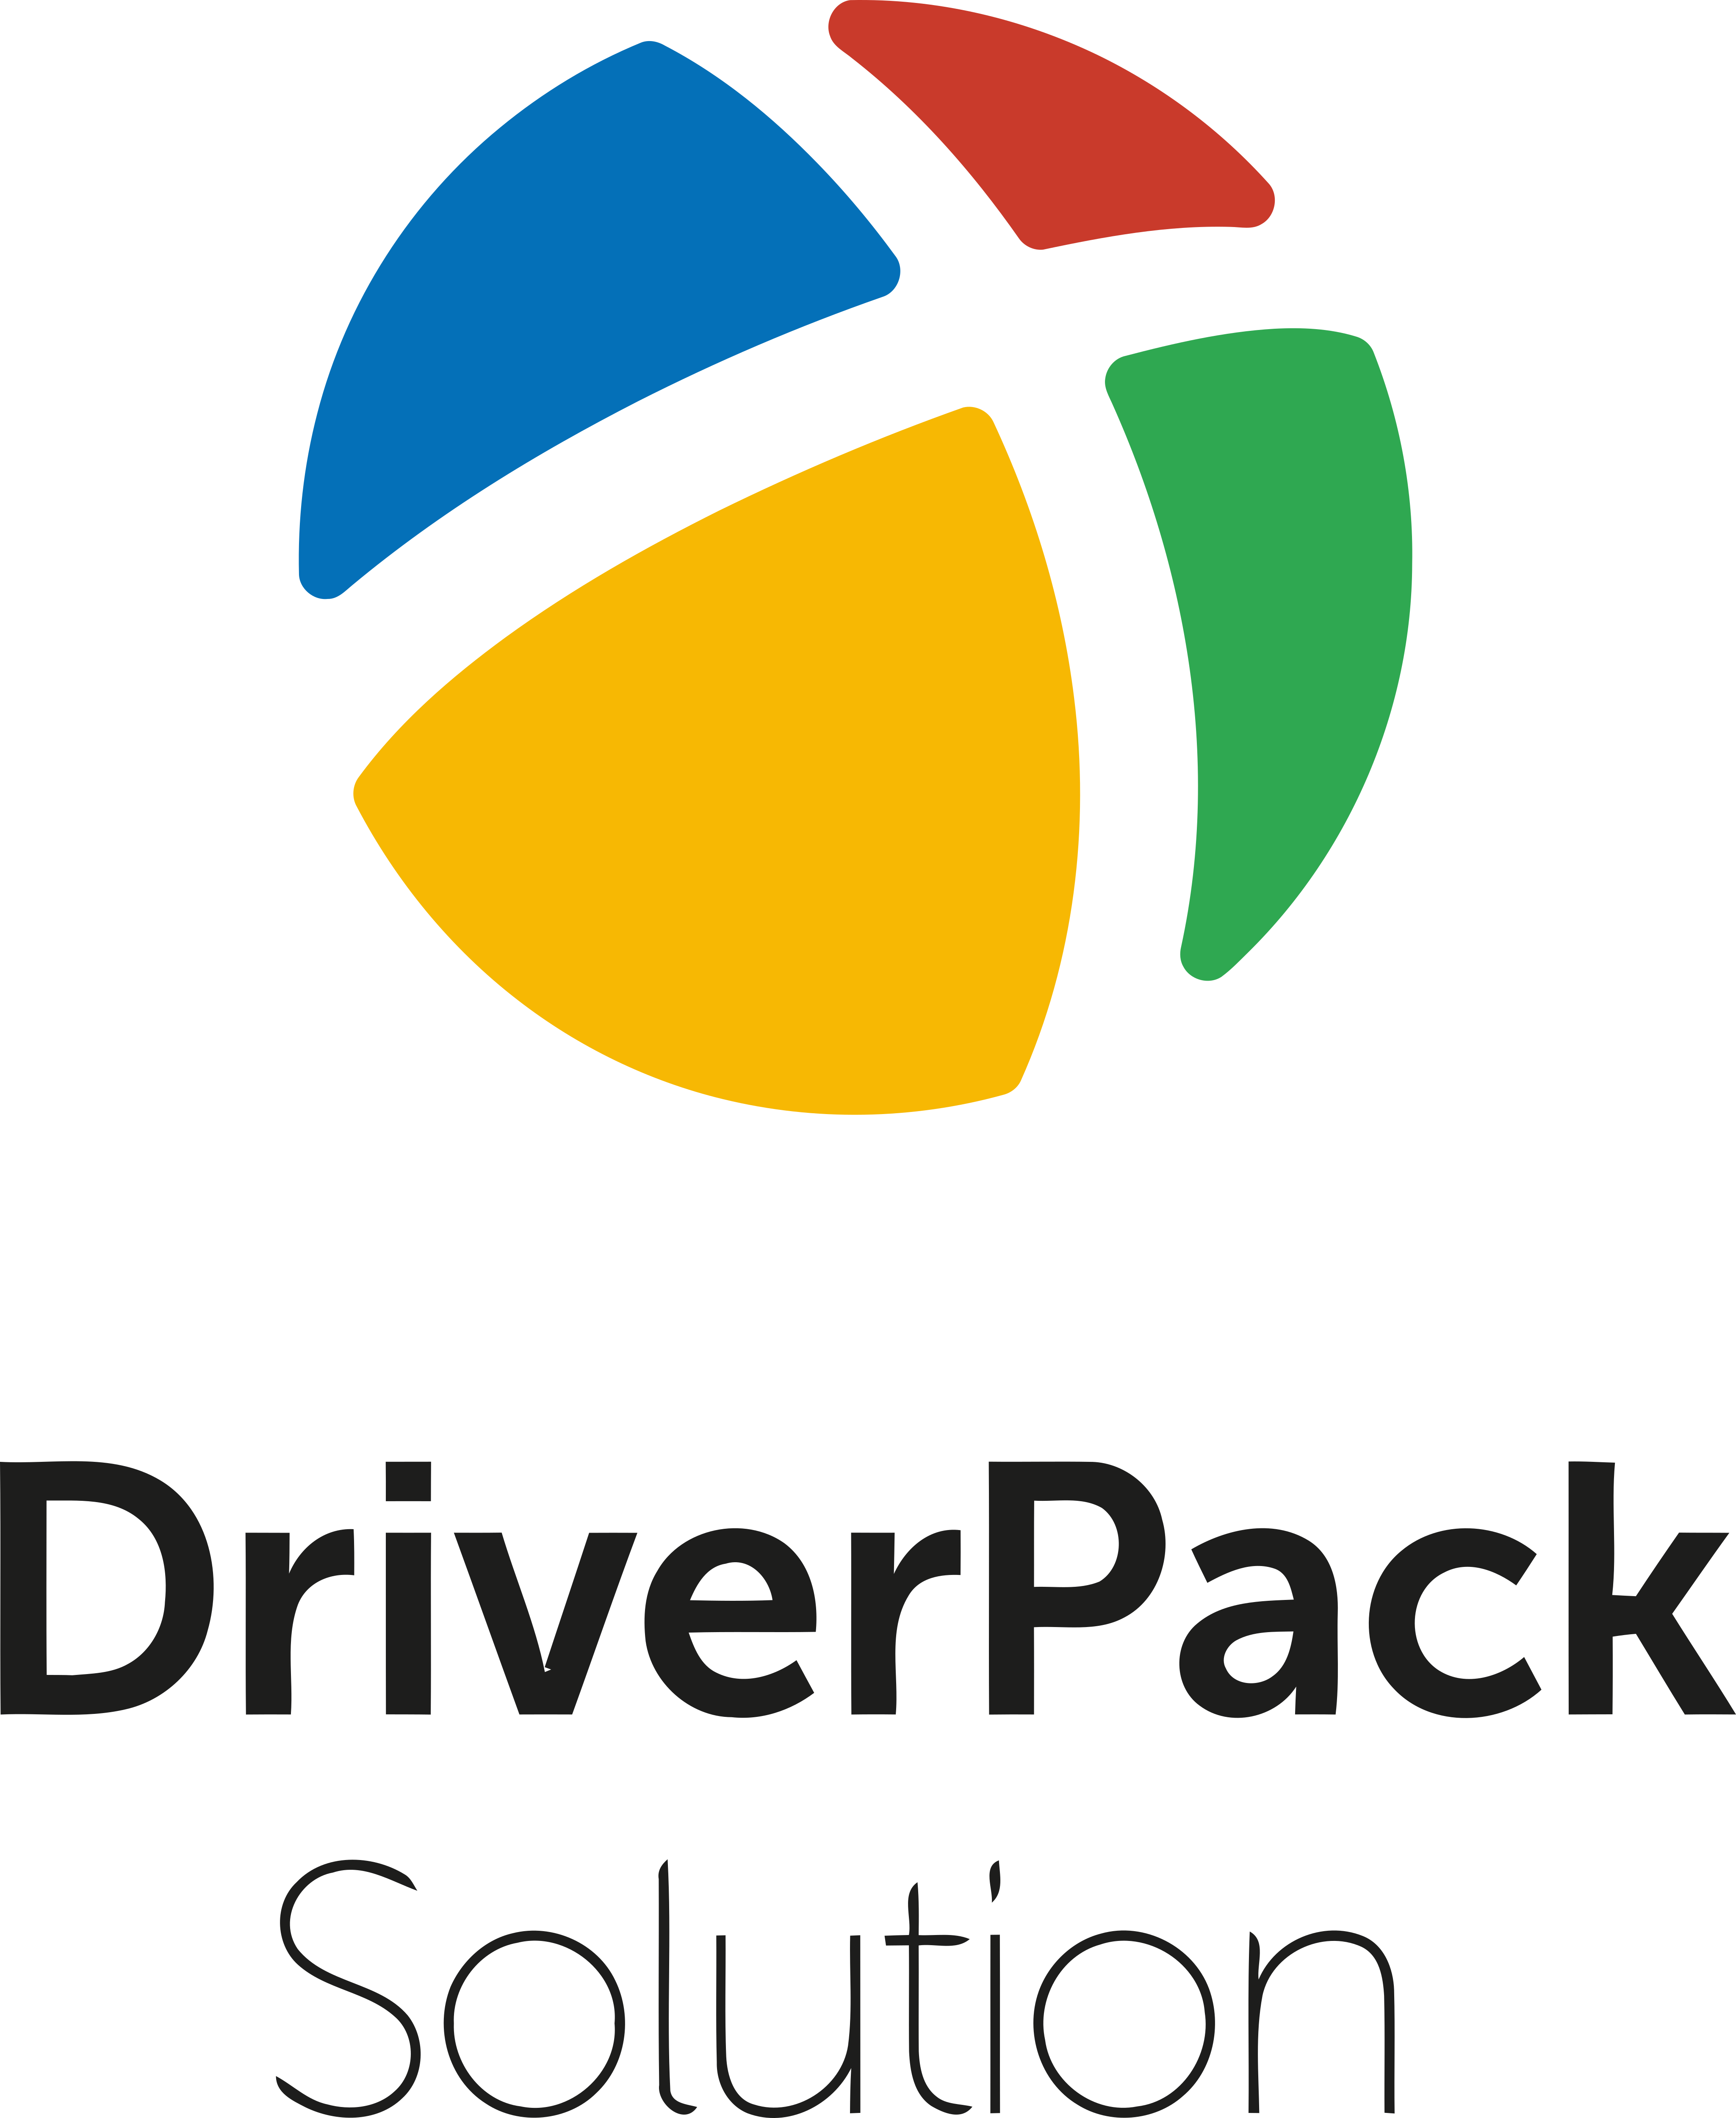 DriverPack Solution Logos Download